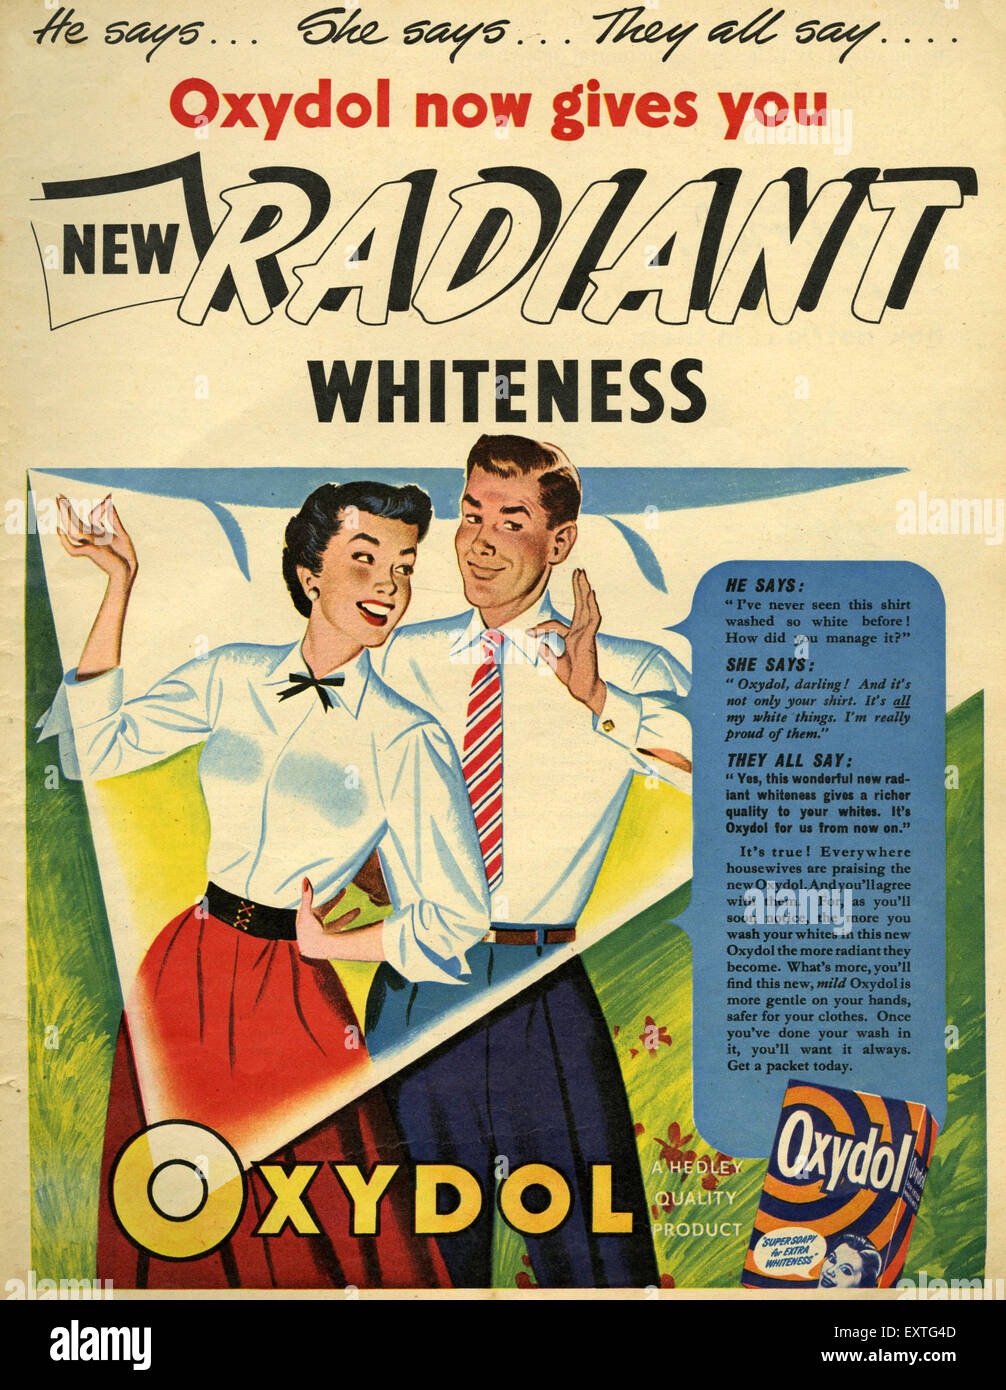 Image result for oxydol uk 1950s